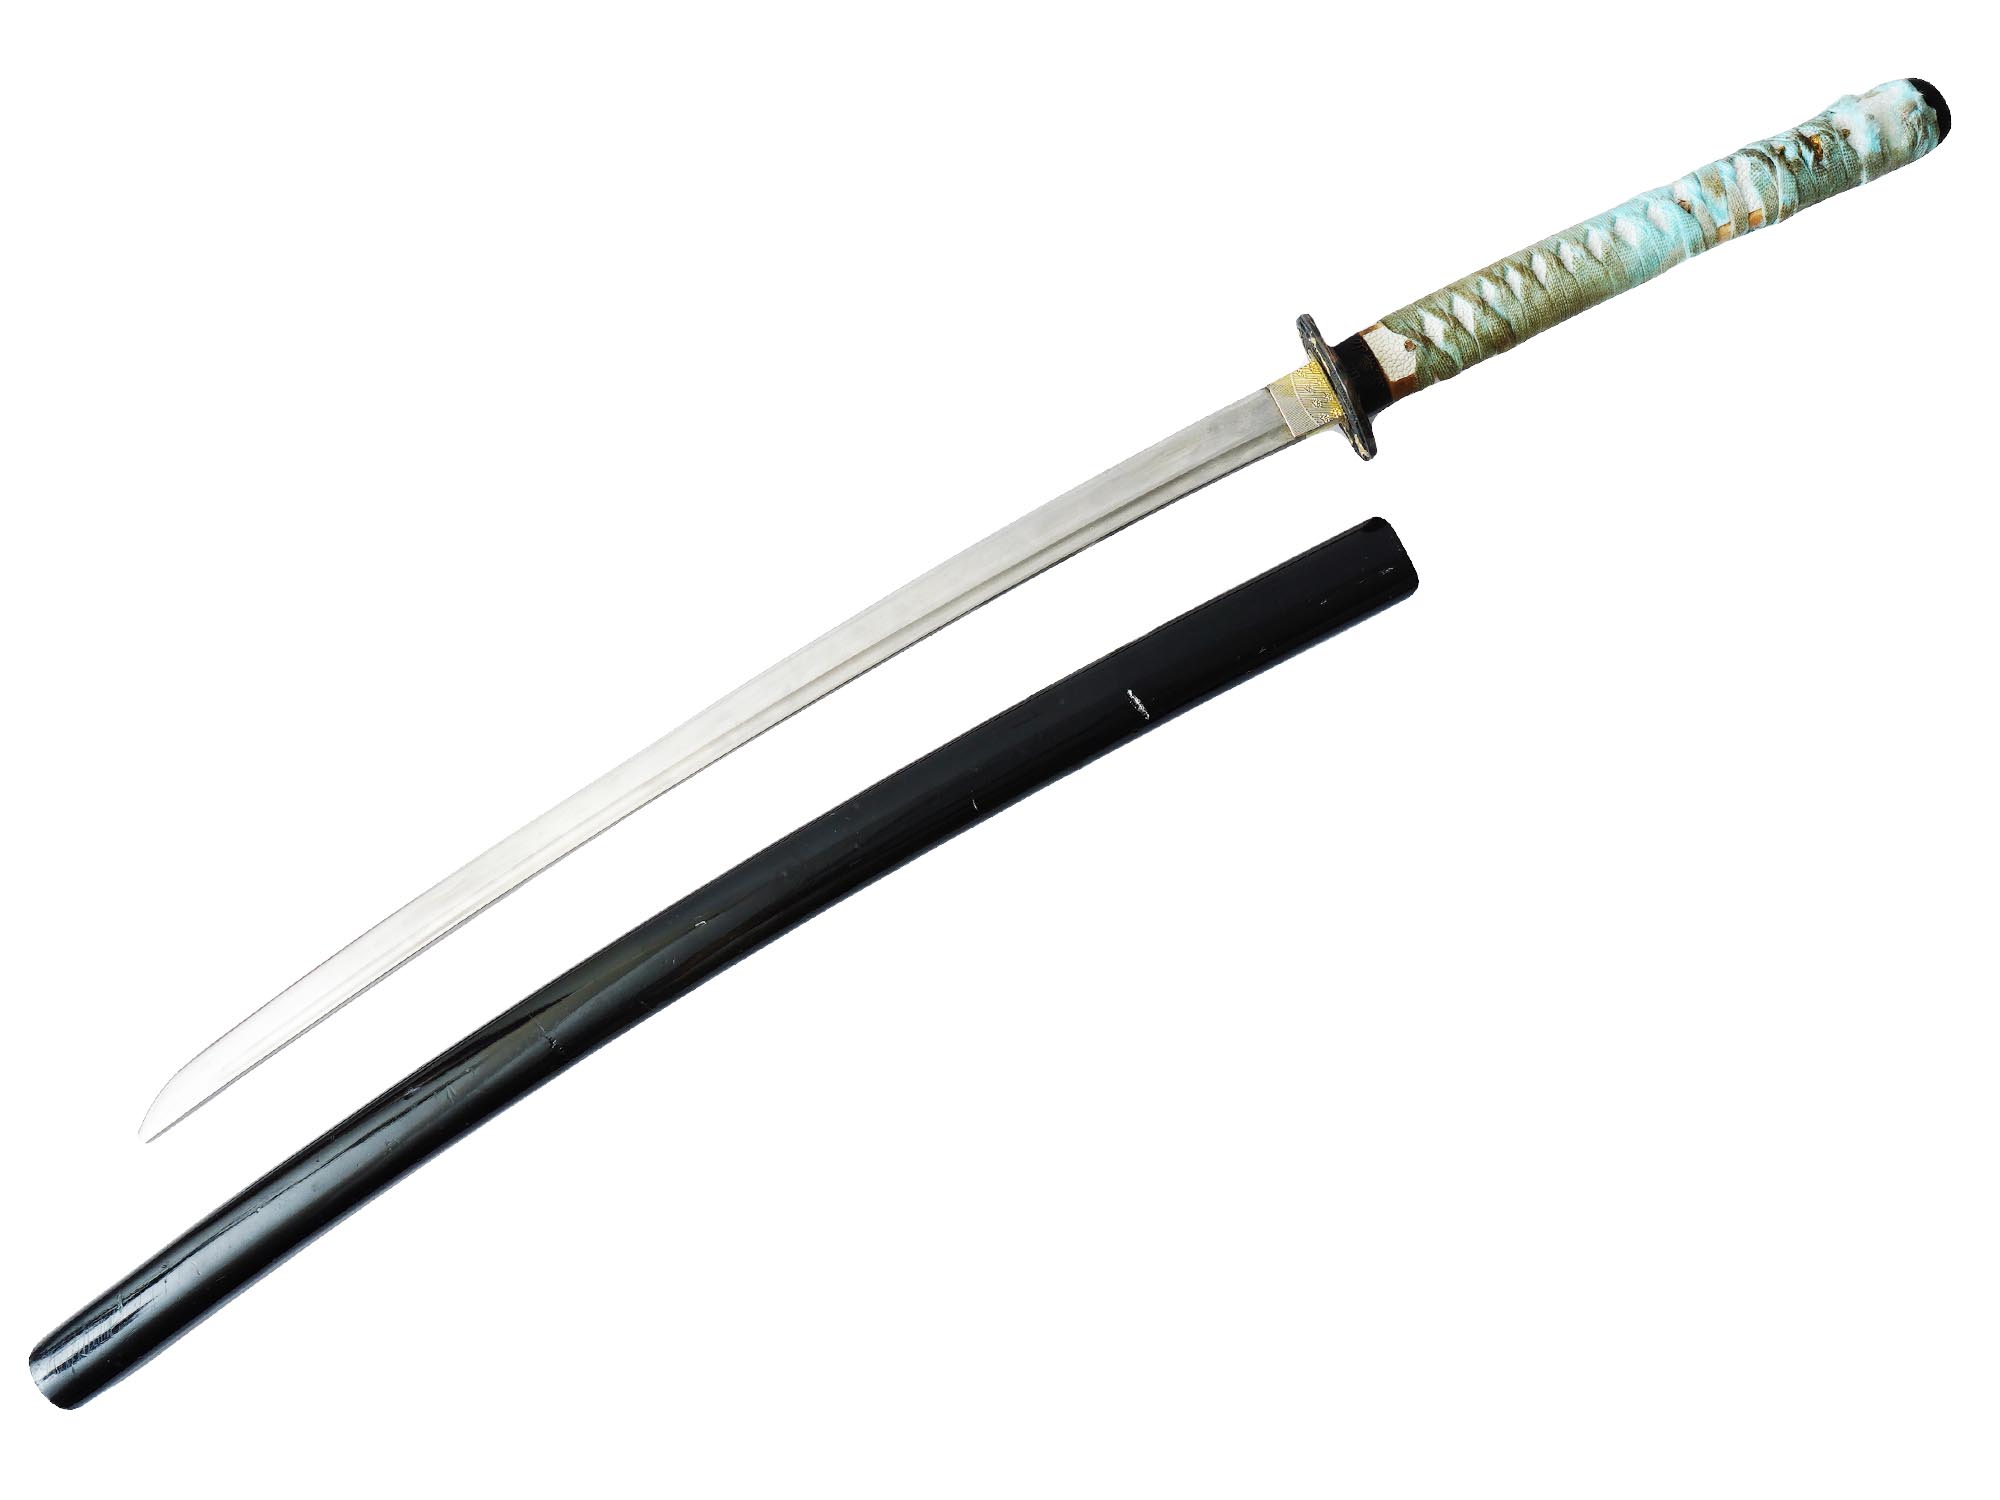 JAPANESE SAMURAI KATANA SWORD WITH SCABBARD PIC-1